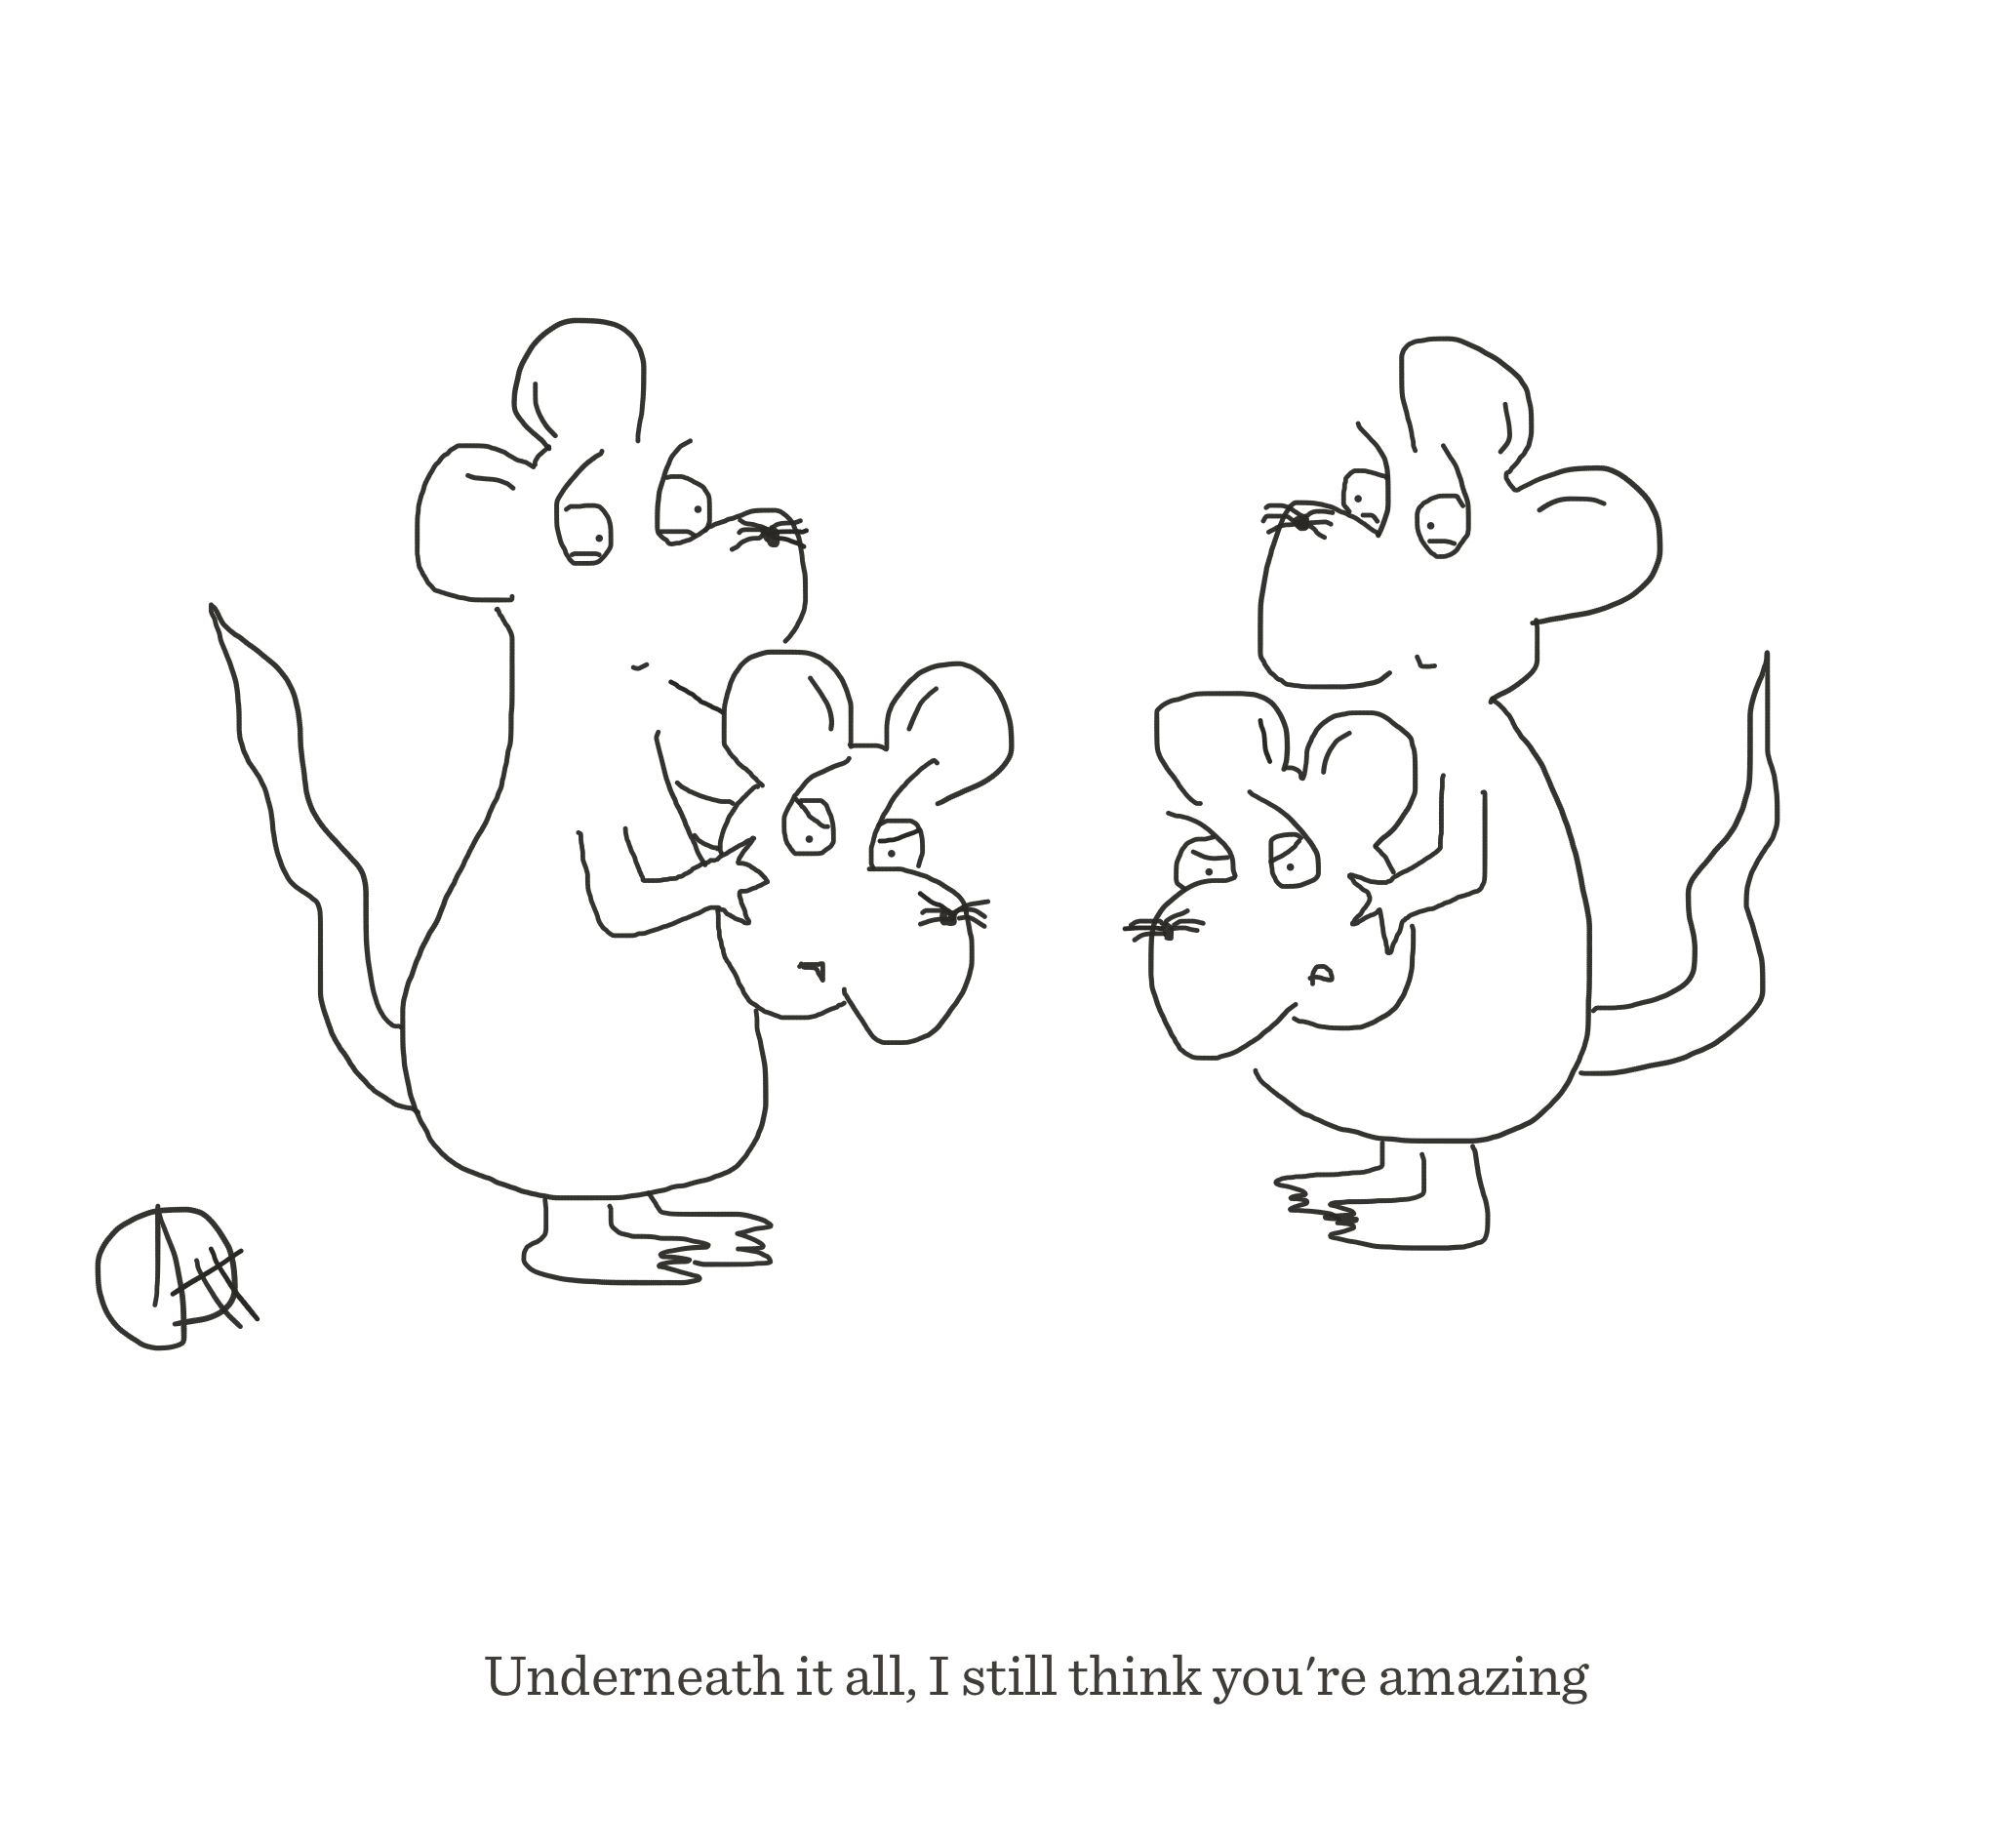 Underneath it all, The Happy Rat cartoon